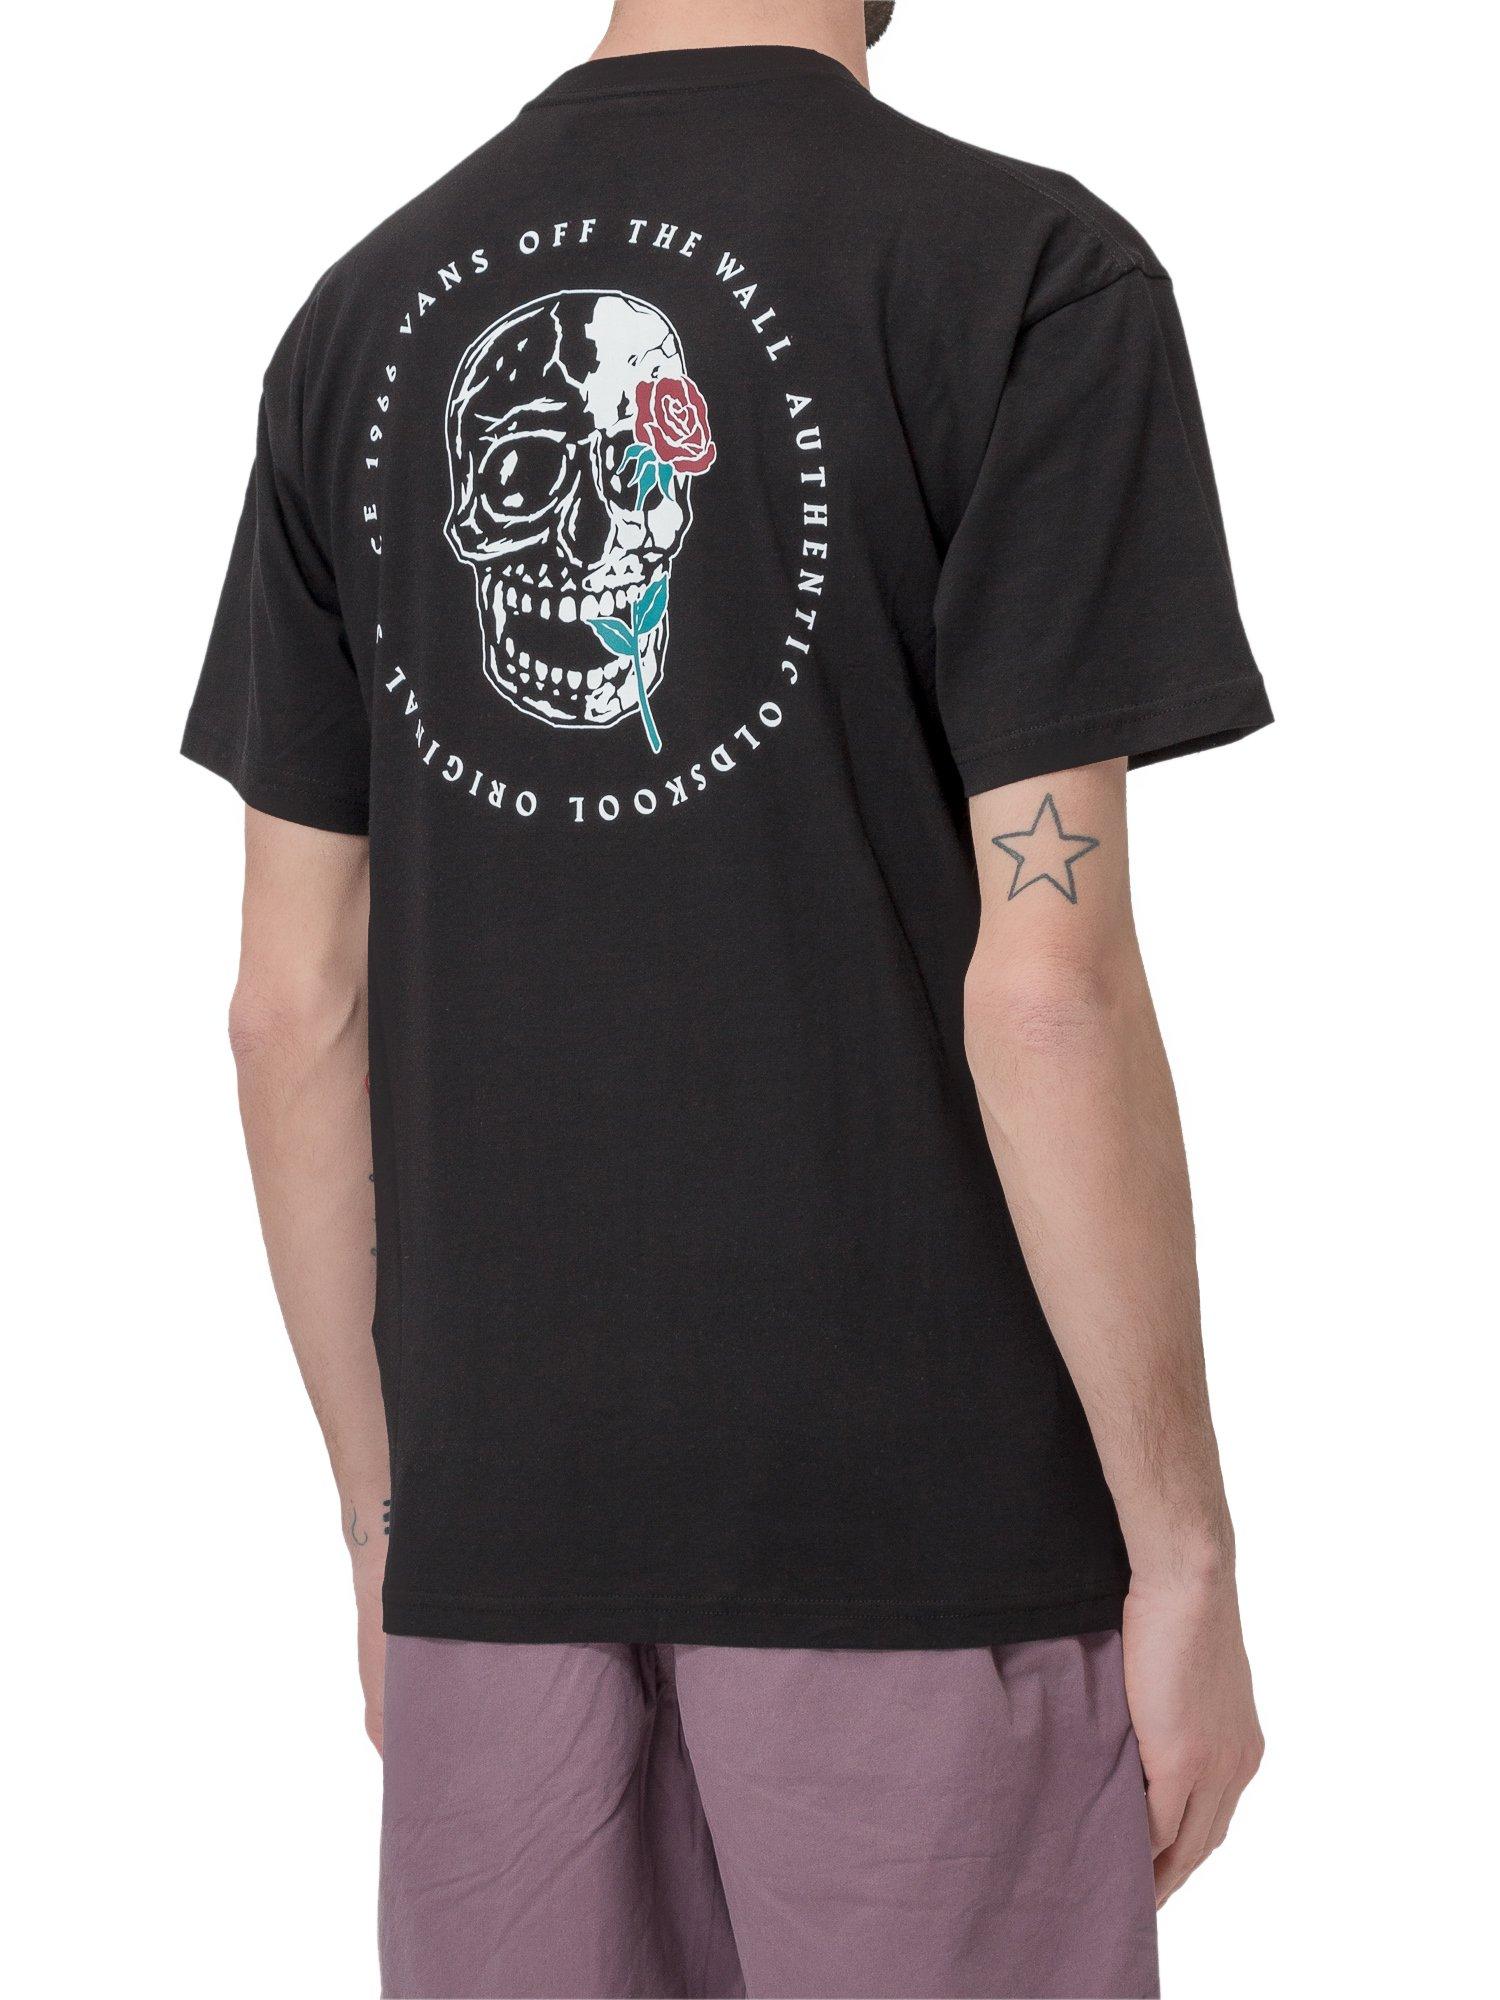 Vans Cotton Coming Up Roses Skull Print T-shirt in Black for Men - Lyst